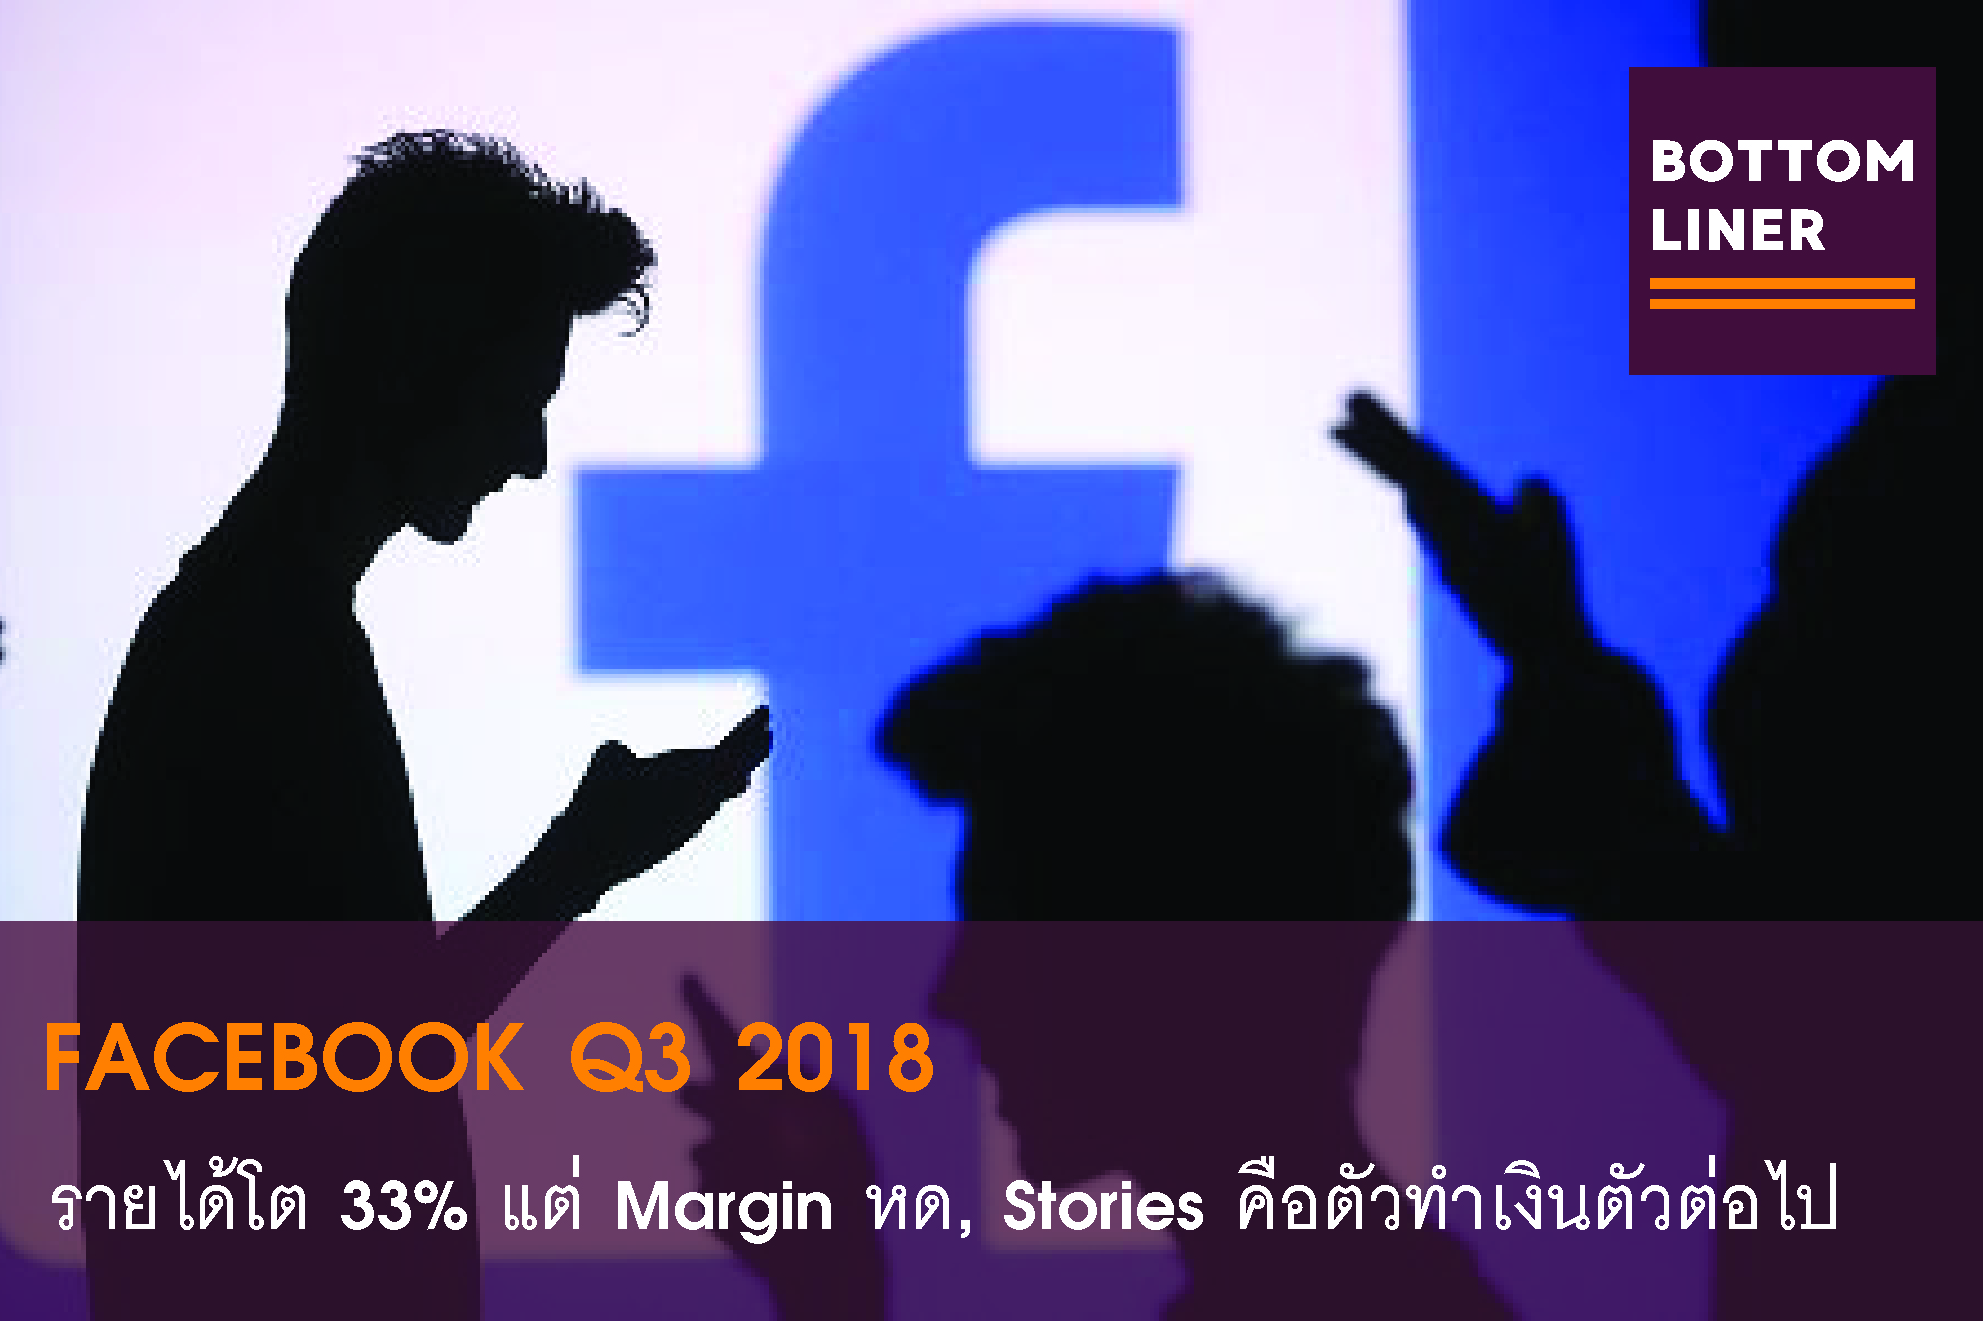 FACEBOOK Q3 2018 : รายได้เติบโต 33% แต่ Margin หด, หวัง Stories คือตัวทำเงินตัวต่อไป